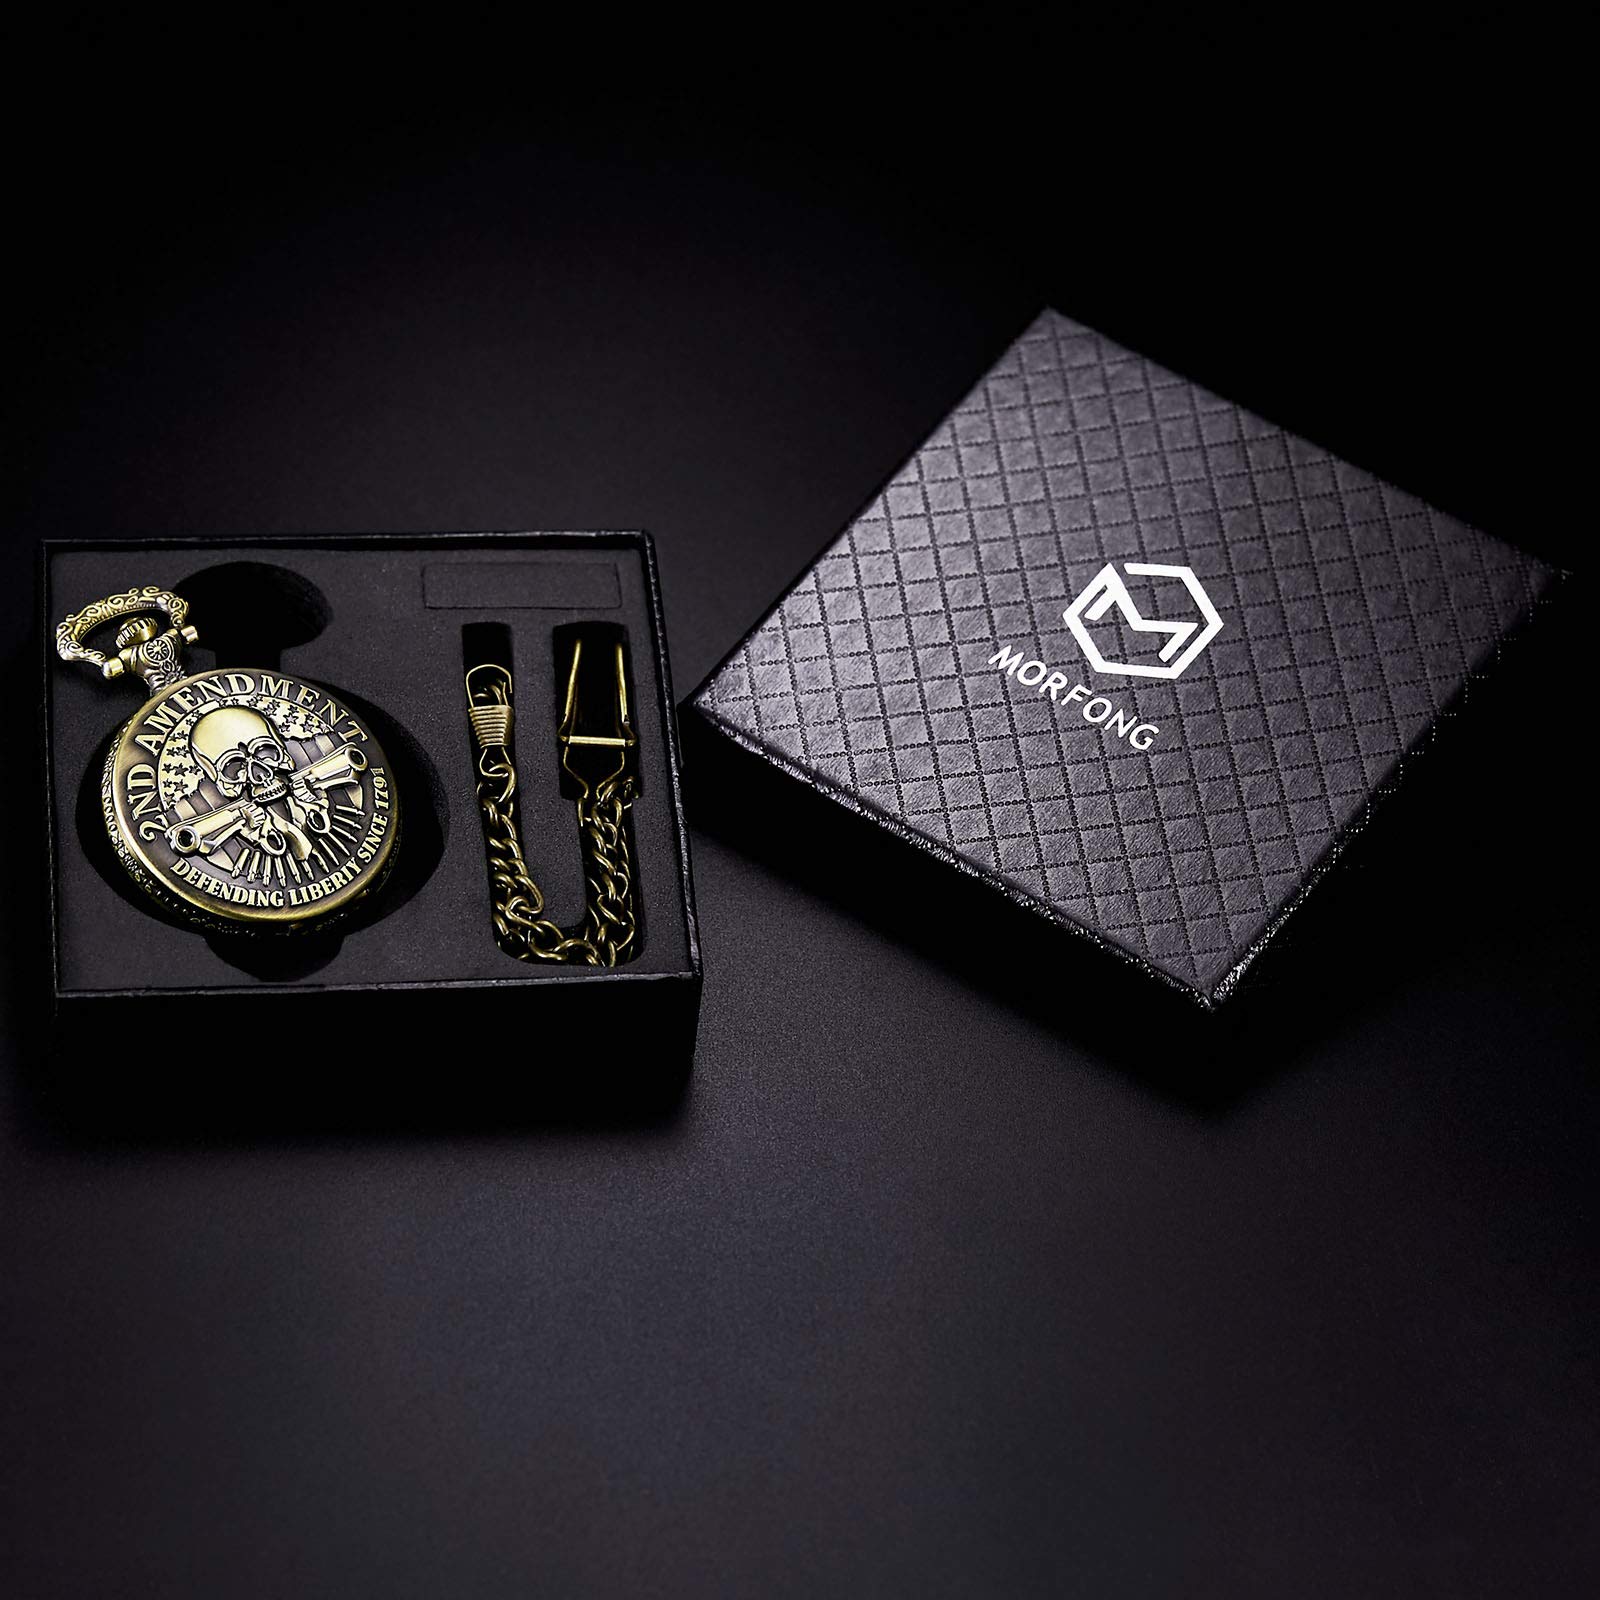 MORFONG Unisex Pocket Watch Quartz Skull Pattern Fob Watches Vintage Bronze with Chani & Box